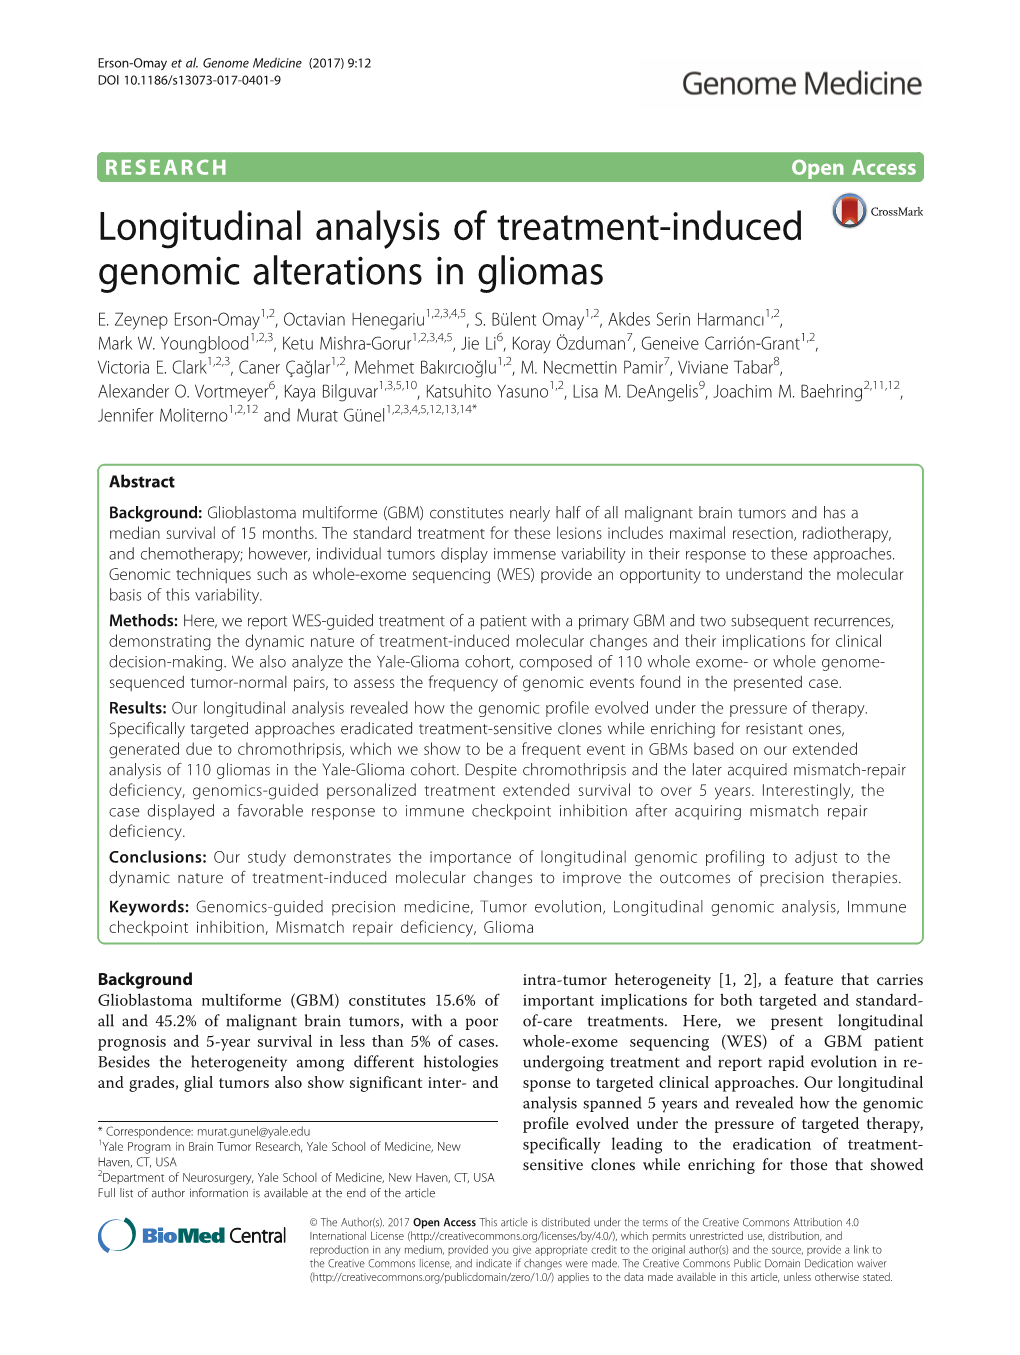 Longitudinal Analysis of Treatment-Induced Genomic Alterations in Gliomas E